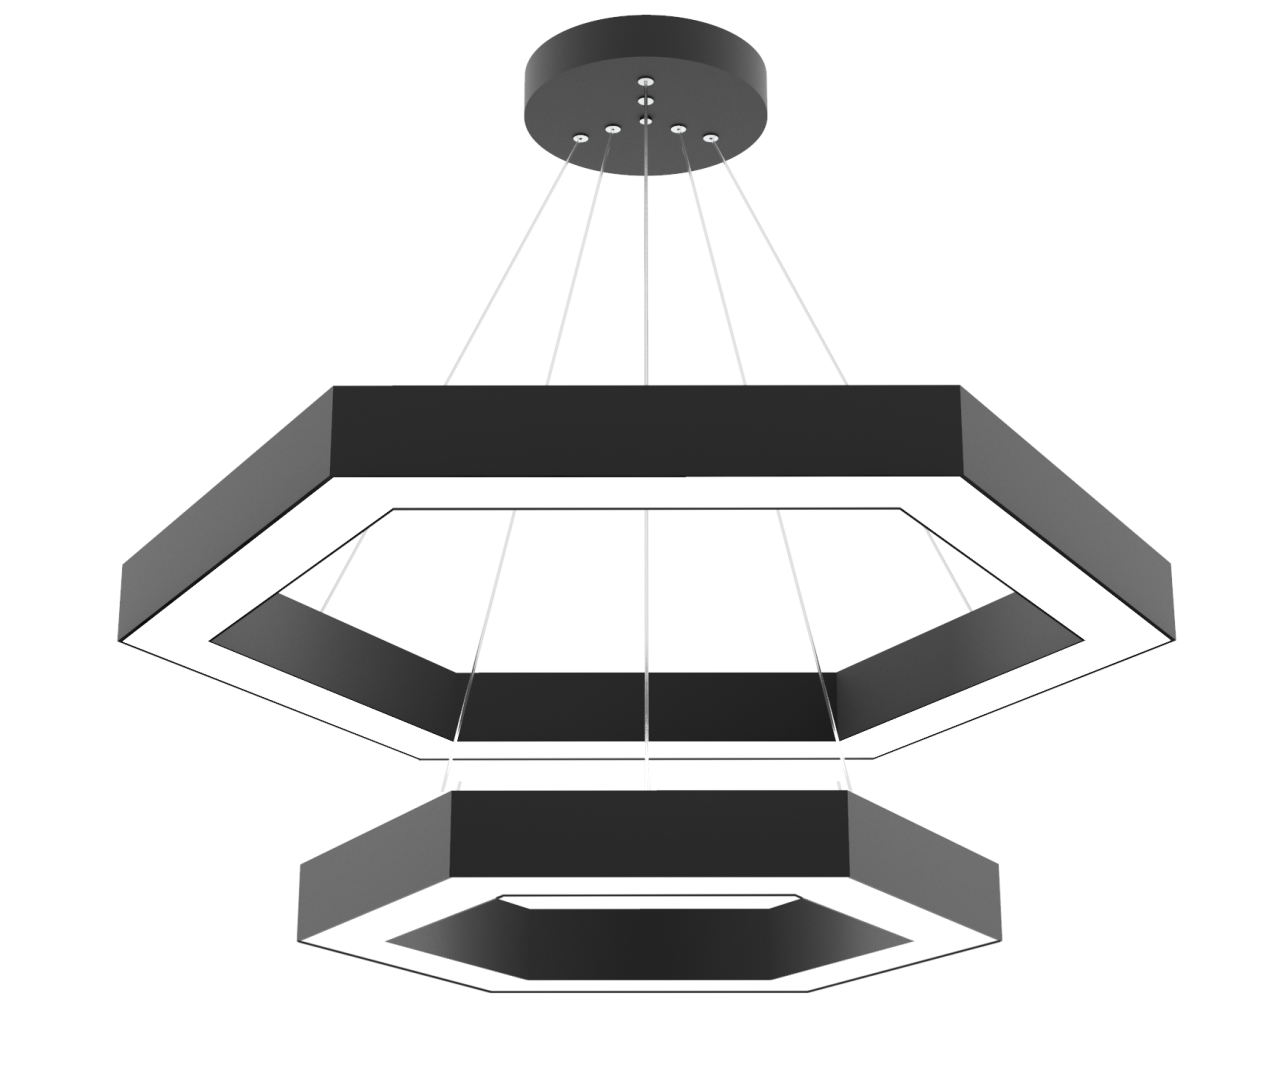 HEXAGON PIRAMIT - Modern LED Avize